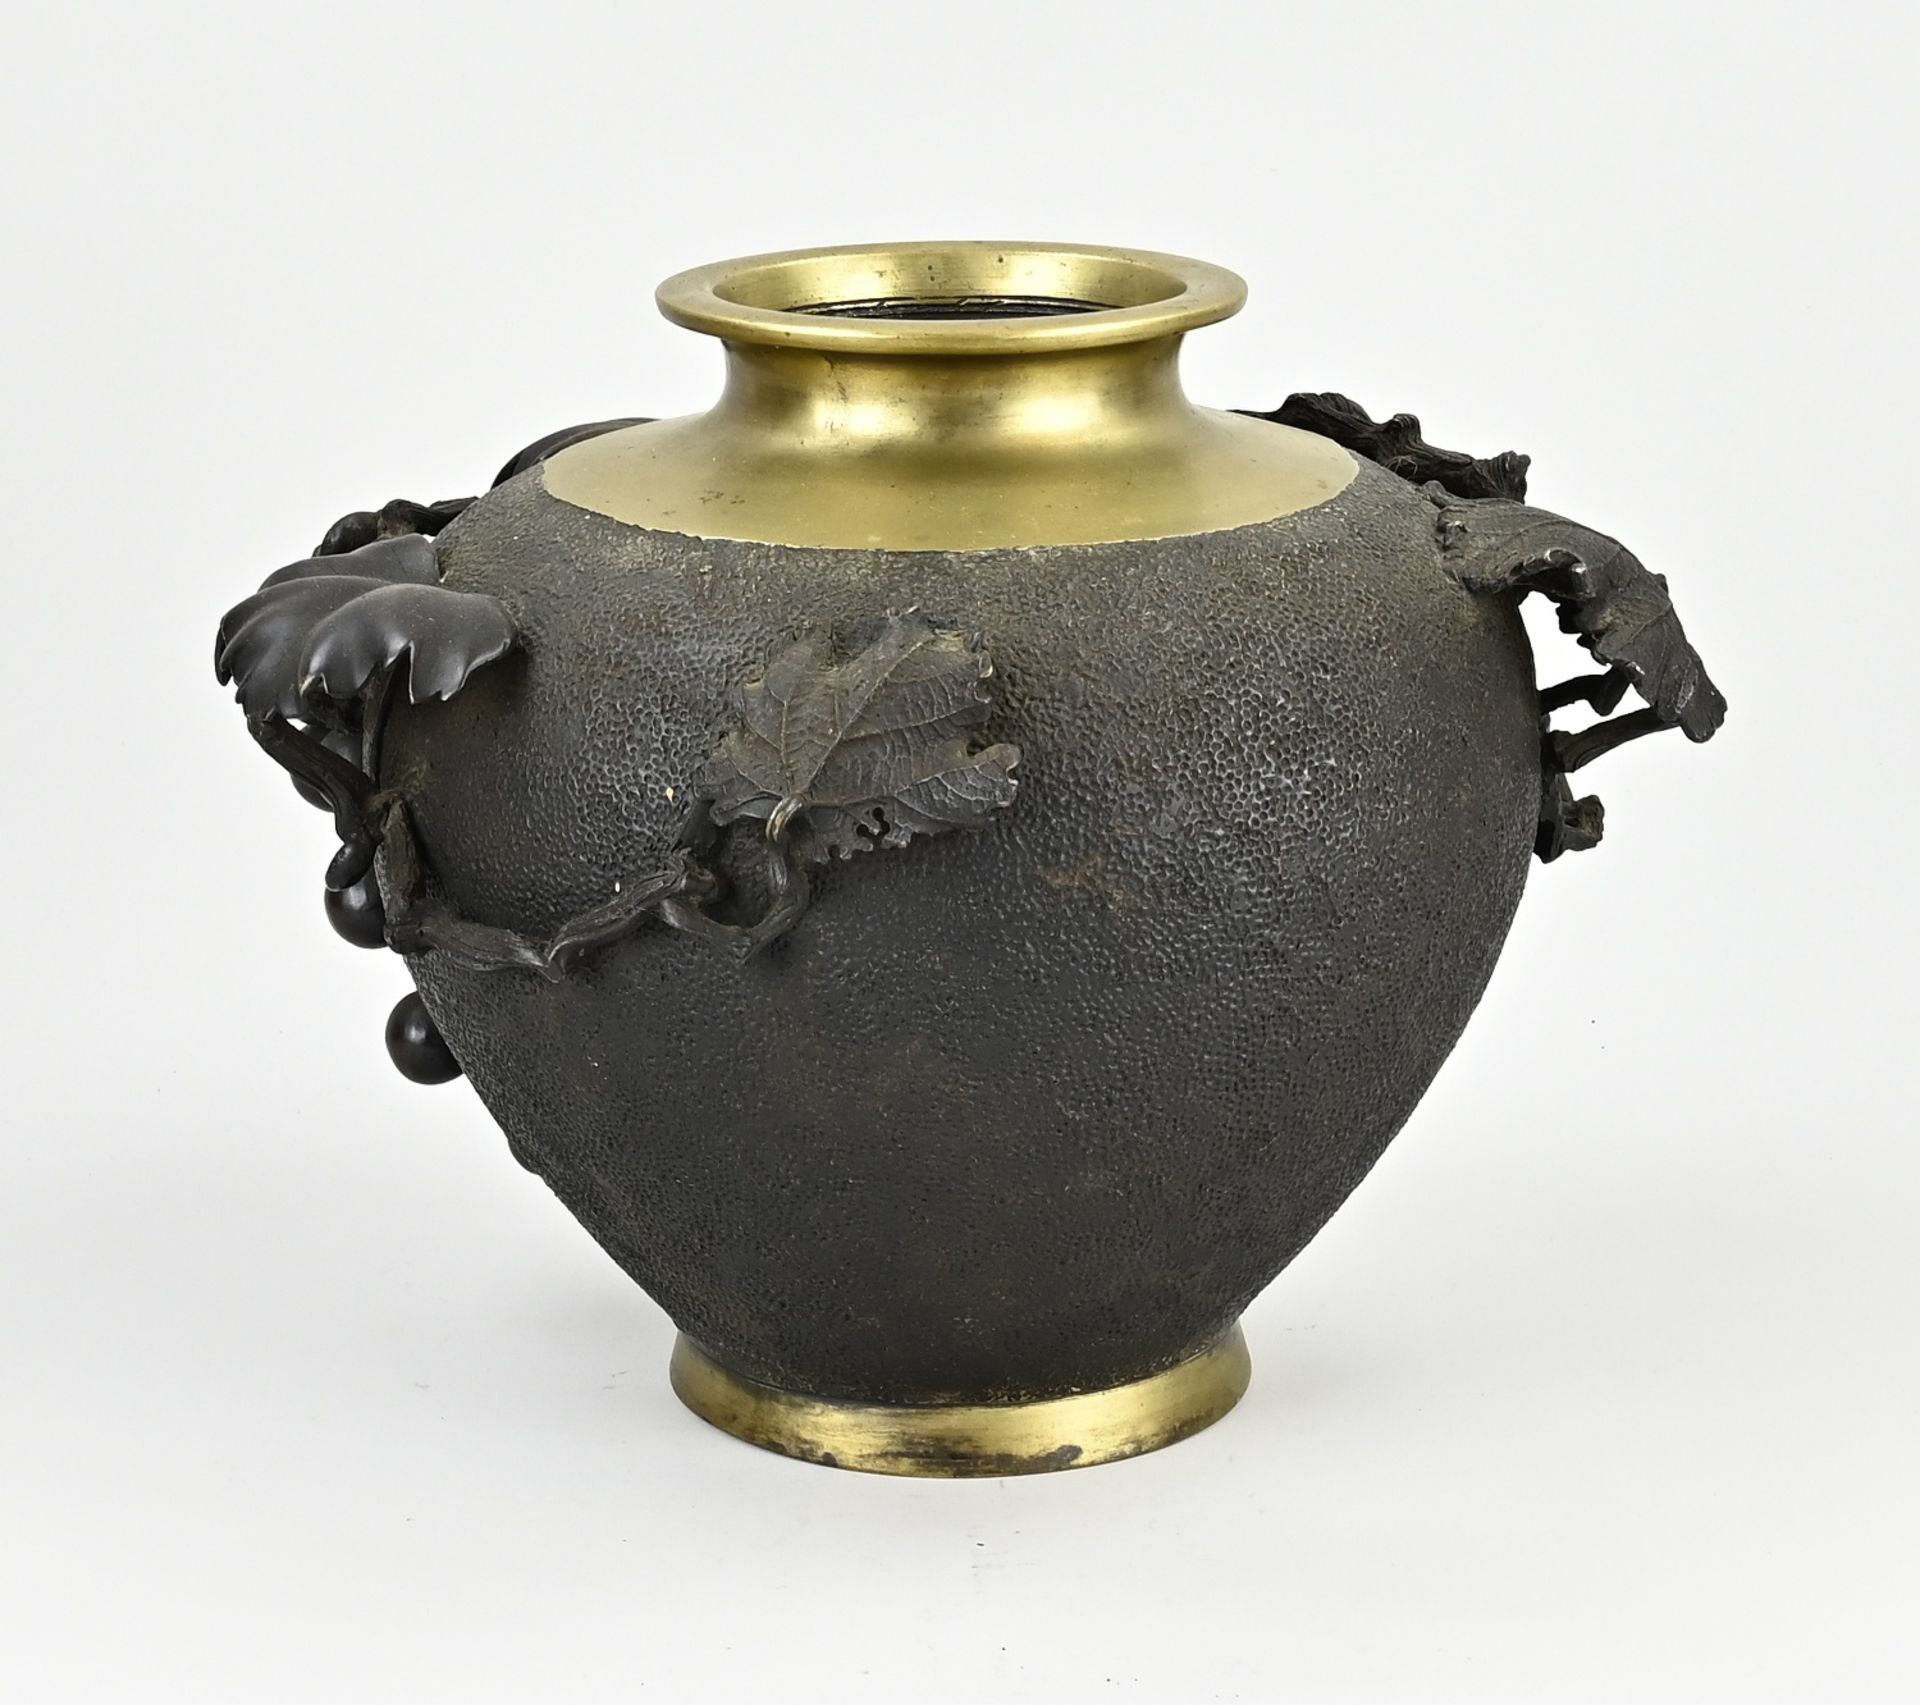 Japanese bronze vase, H 25 x Ø 27 cm. - Image 2 of 3